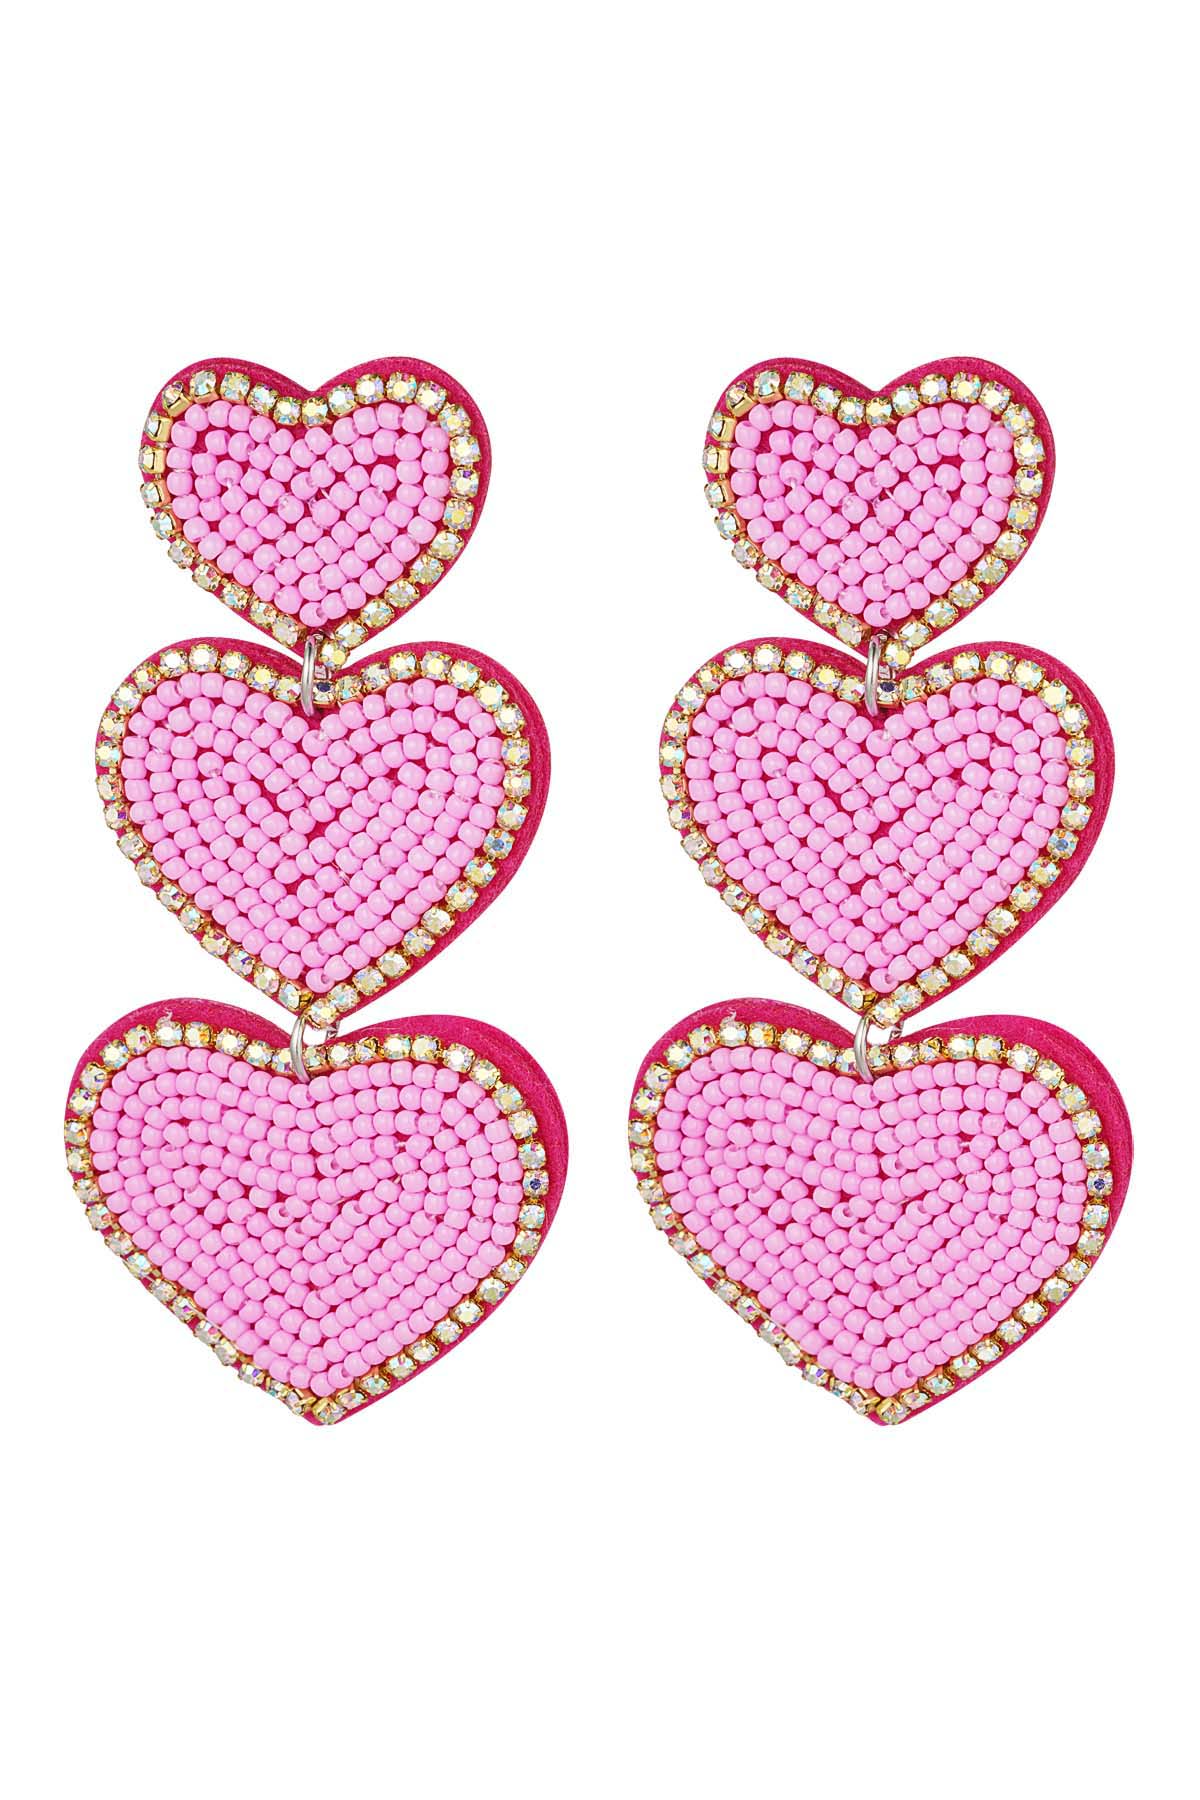 Earrings beads 3 x heart - pink Fuchsia Glass